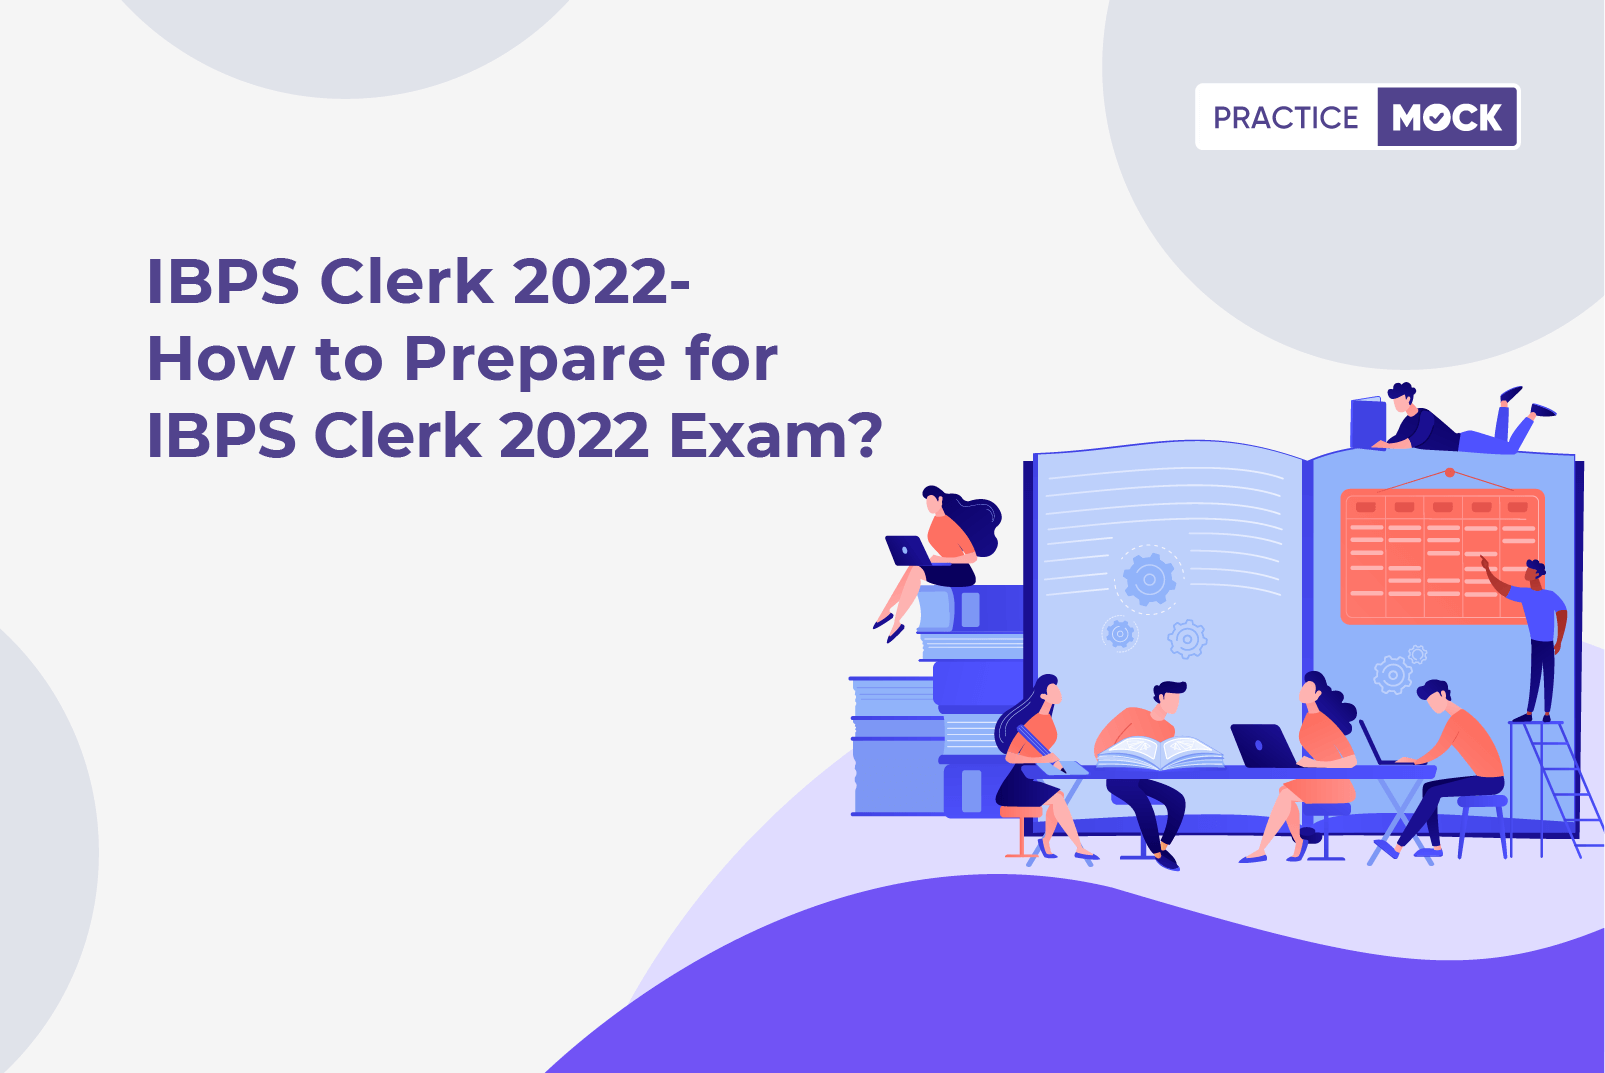 IBPS Clerk 2022-Preparation Tips and Strategies